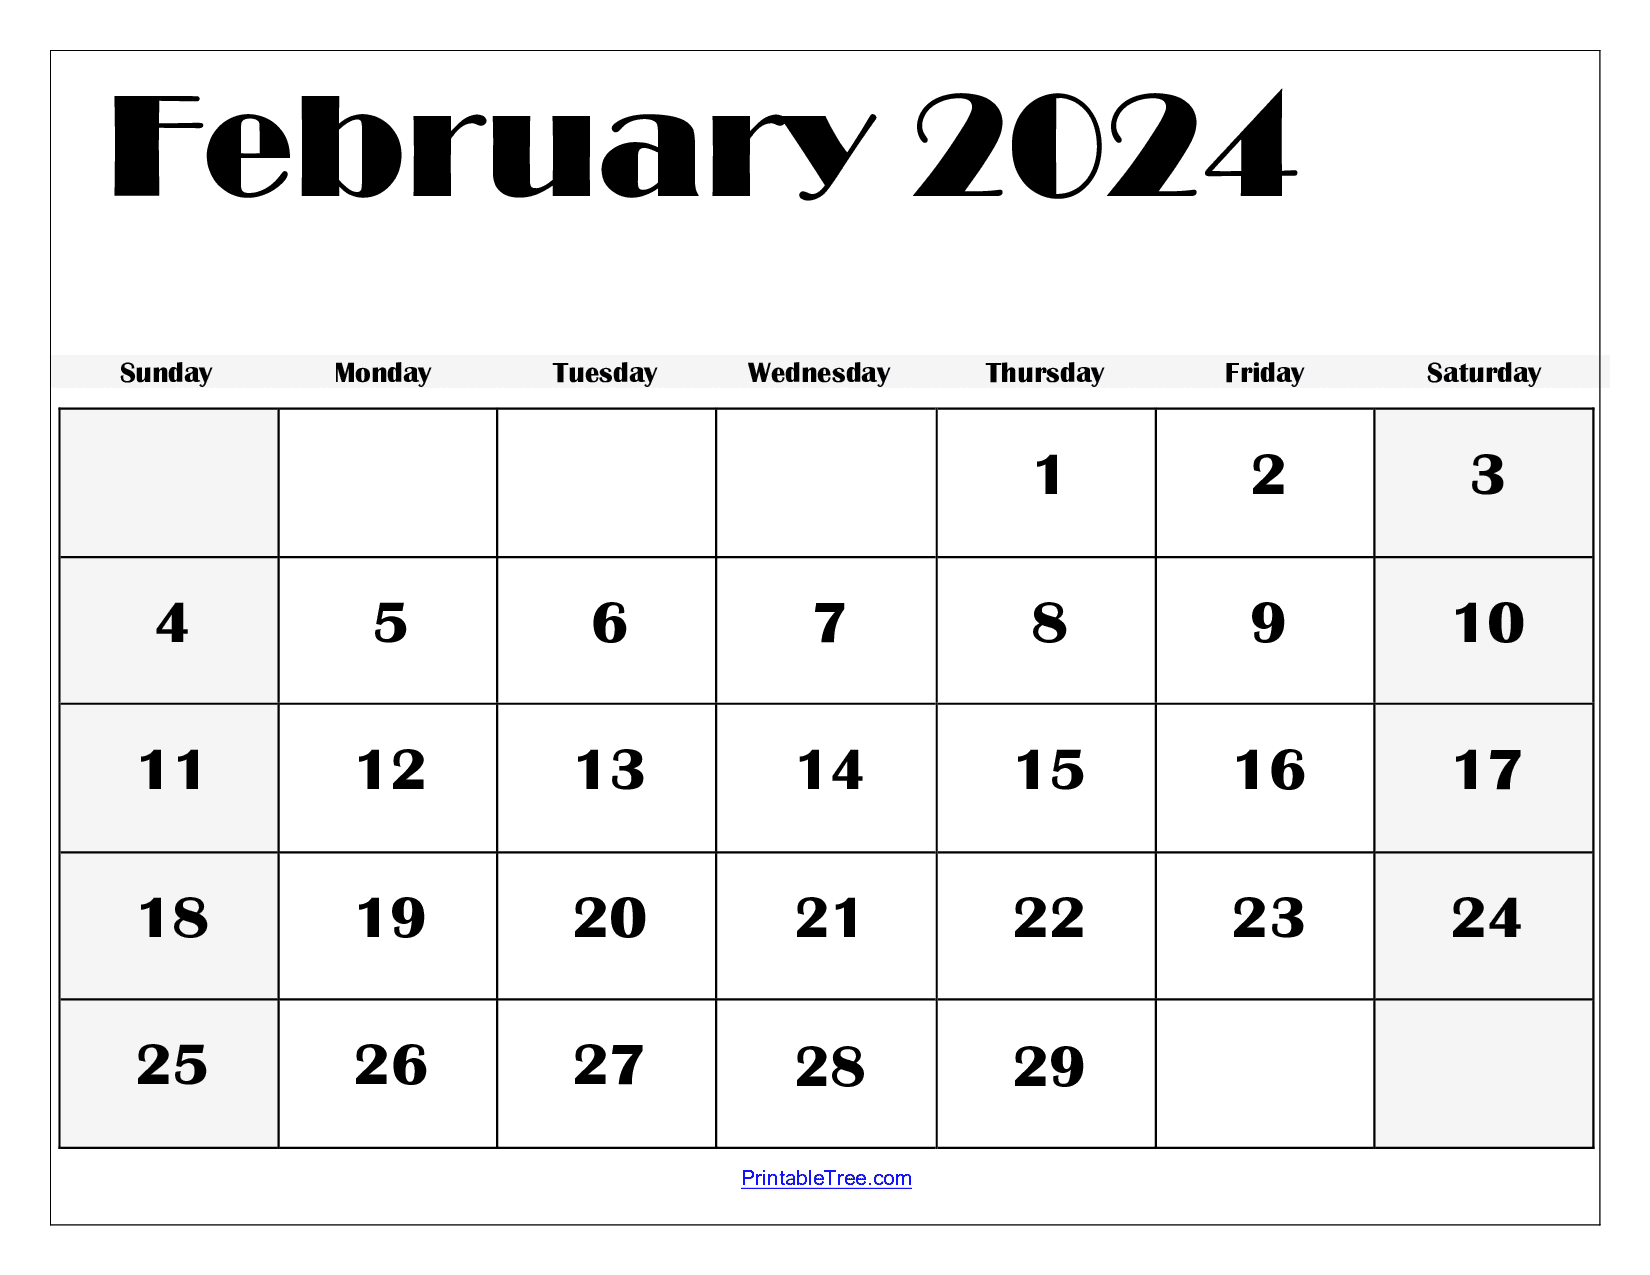 February 2024 Calendar Printable Pdf Template With Holidays for Free Calendar Printable February 2024